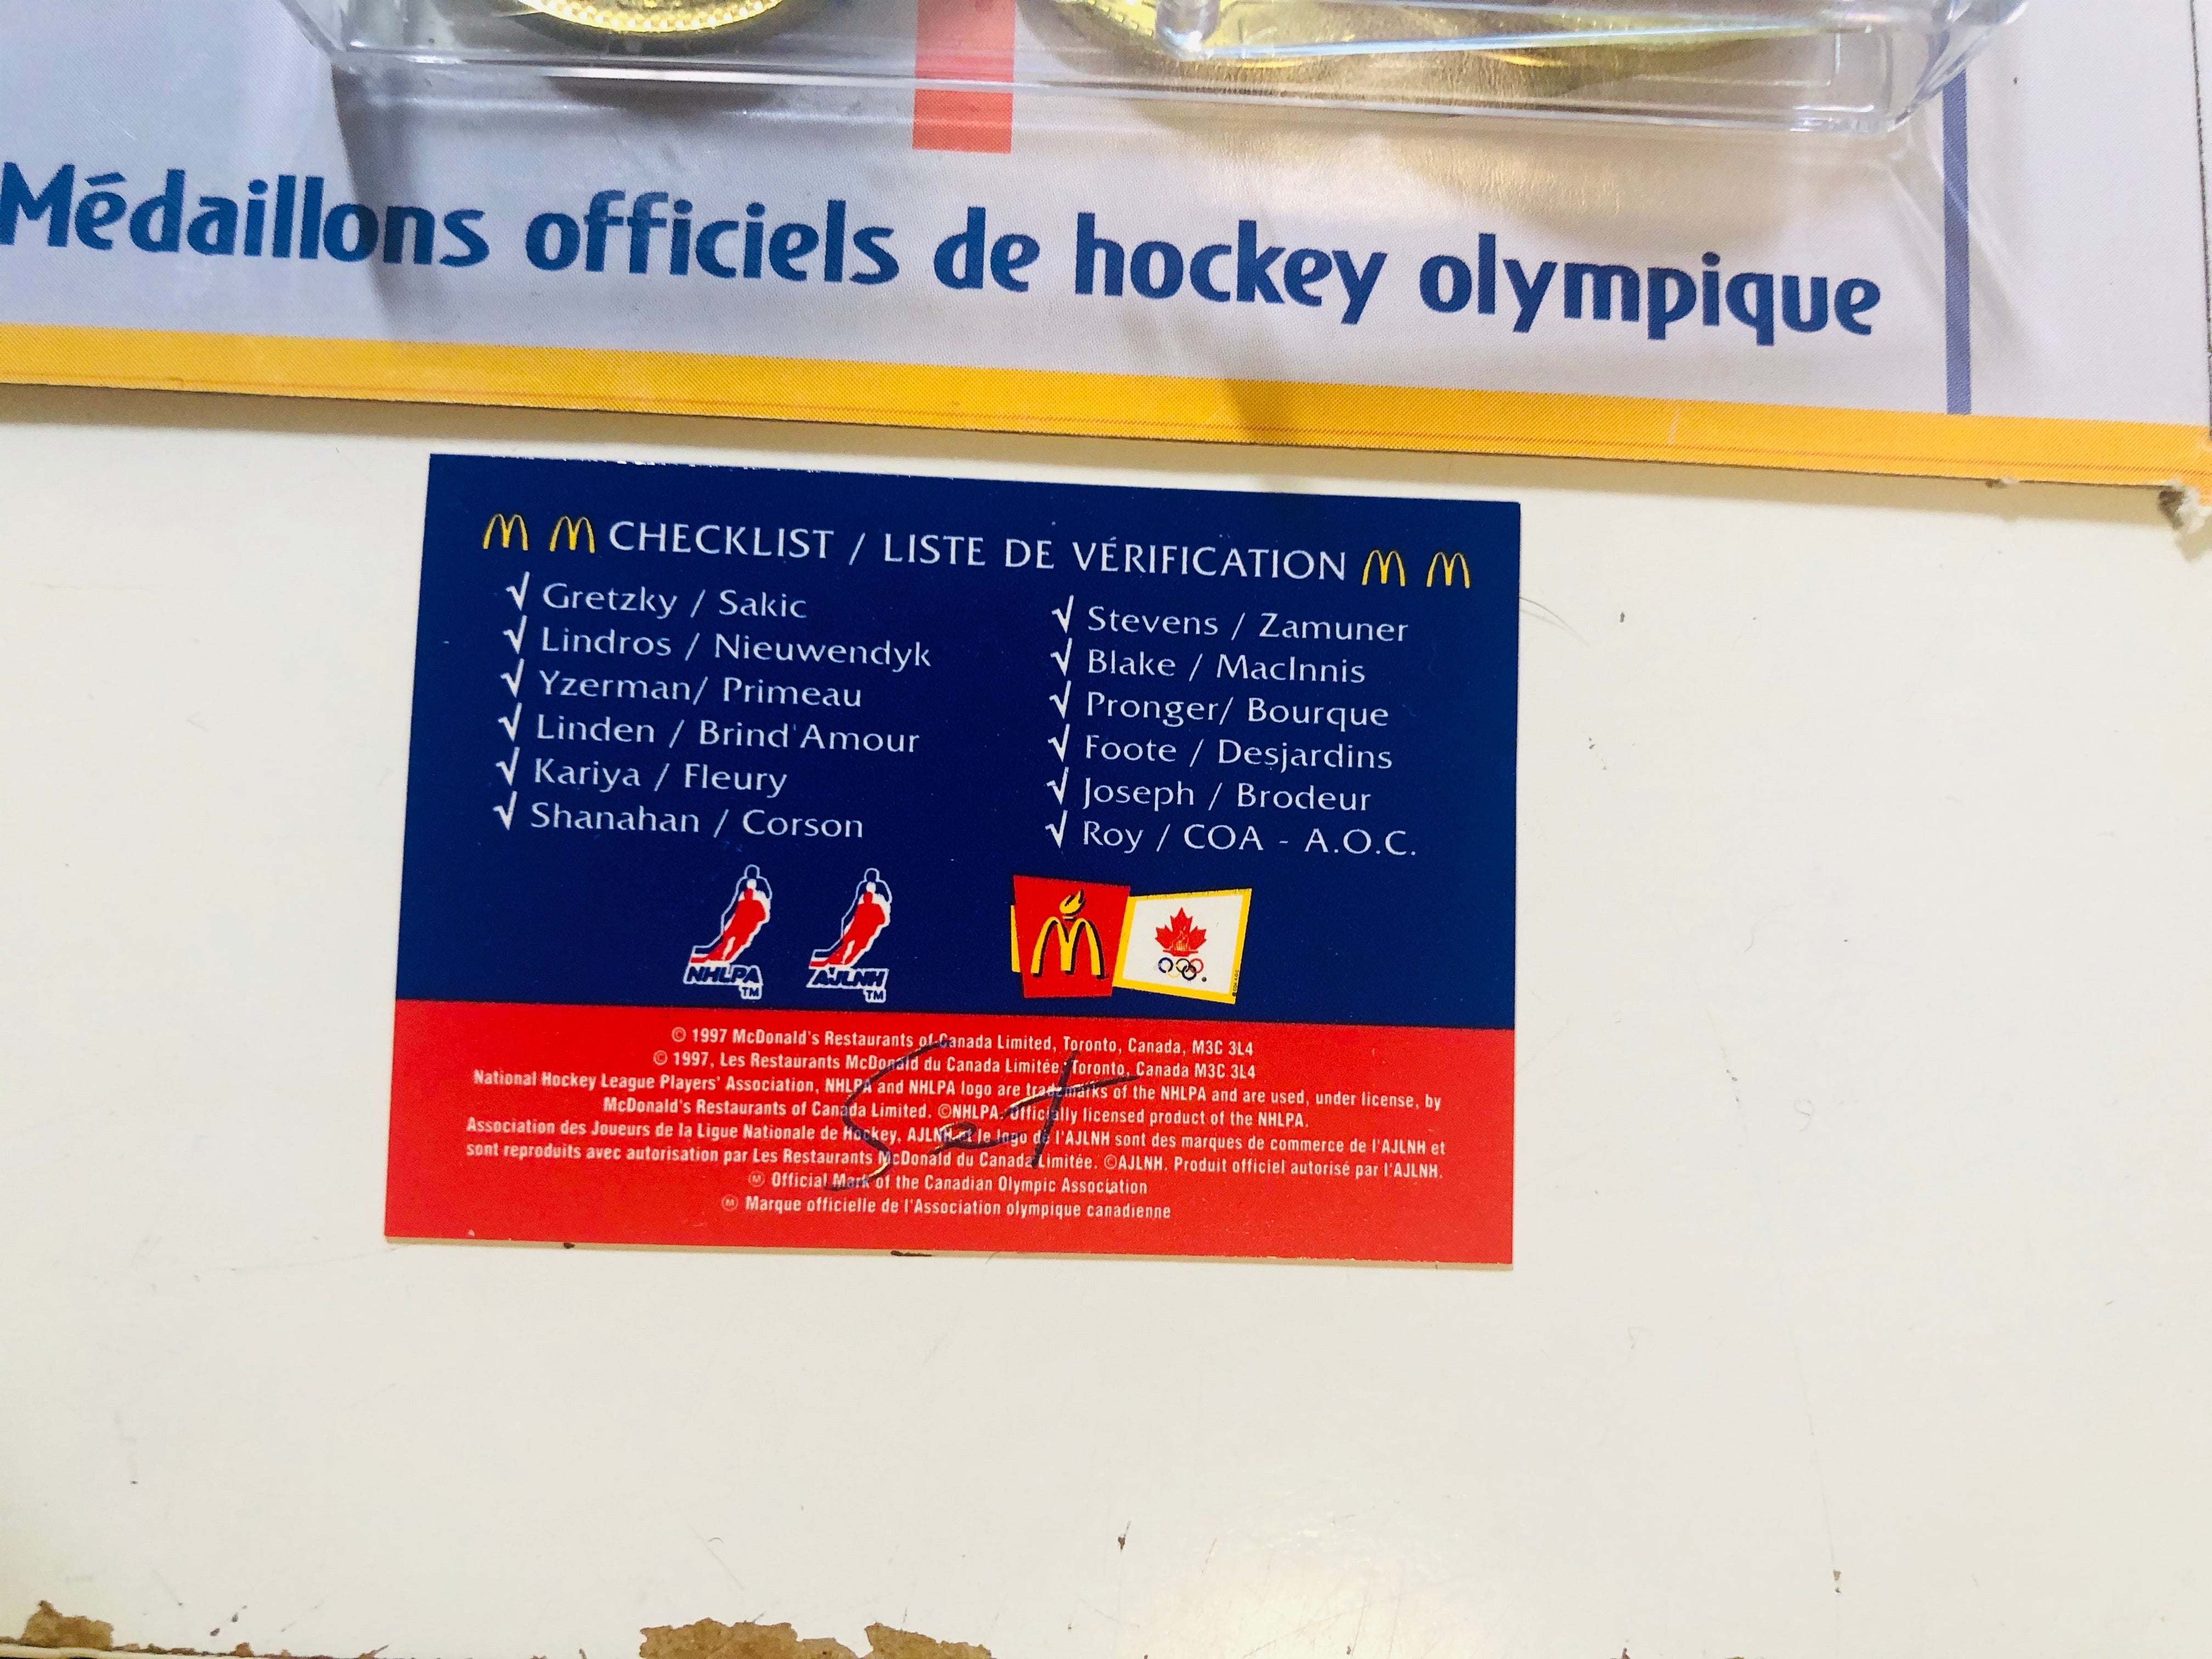 Team Canada Olympic hockey coins set 1998